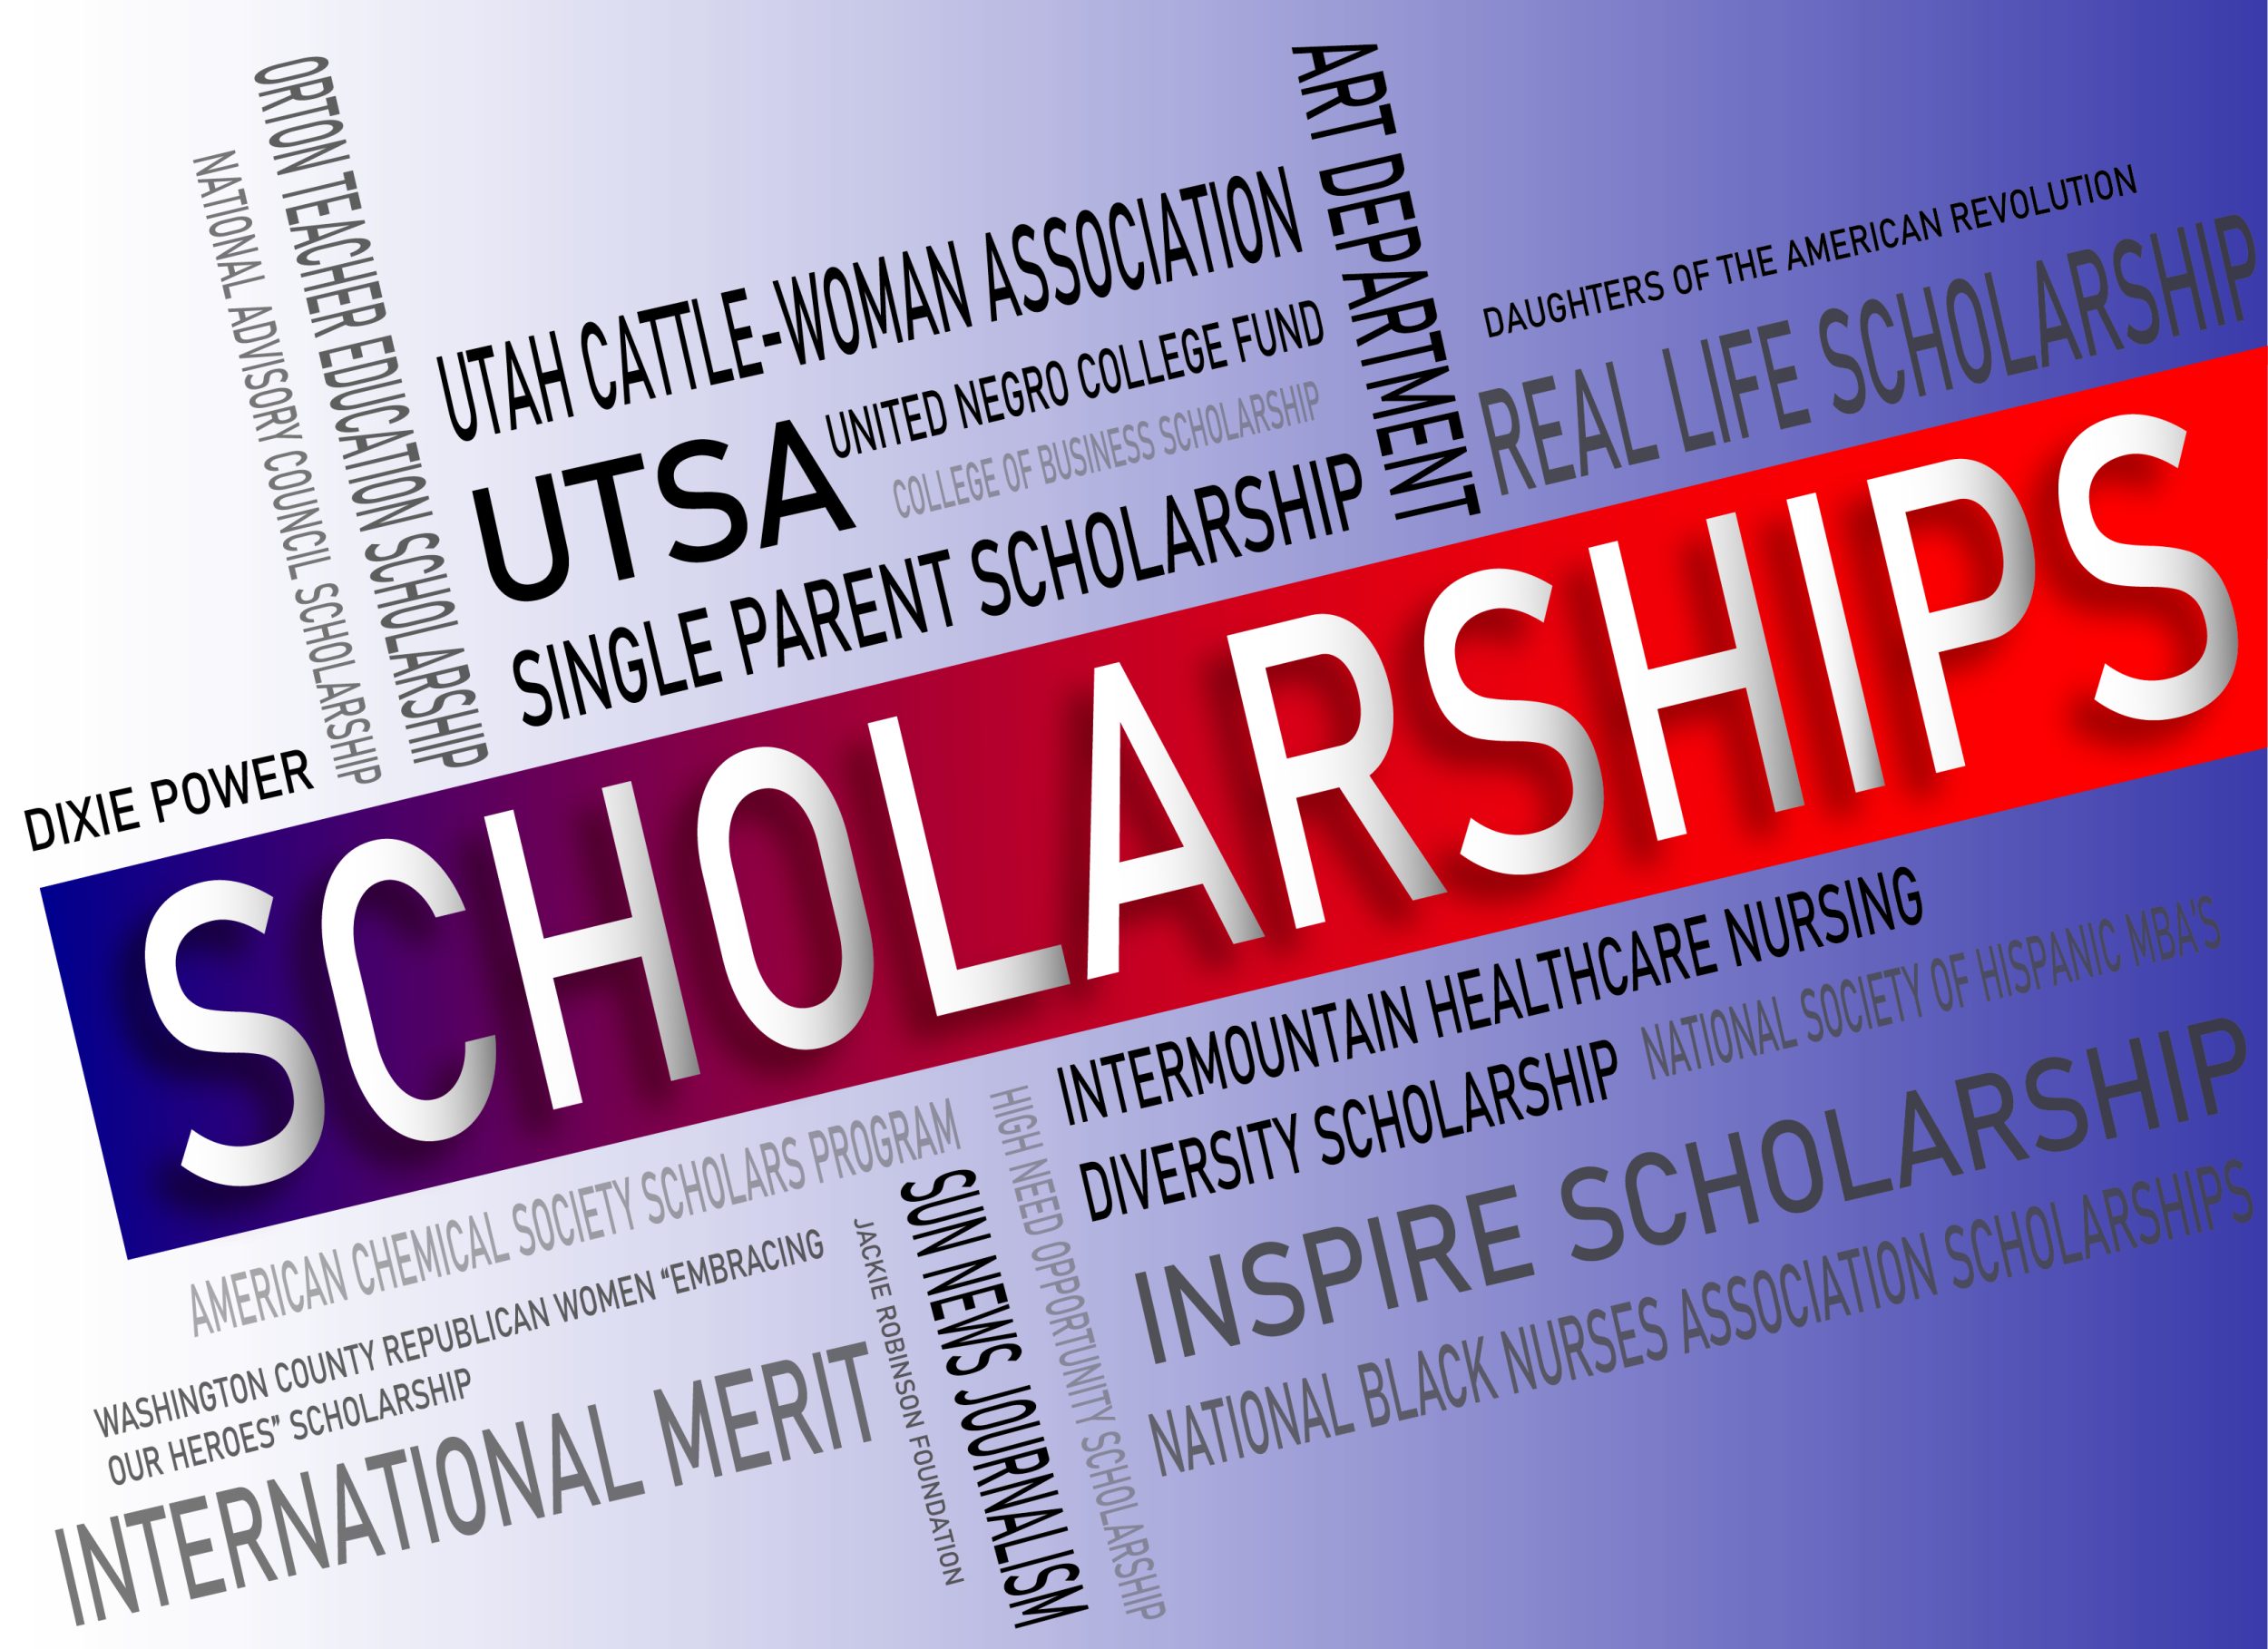 The vast amount of scholarship opportunities at Utah Tech